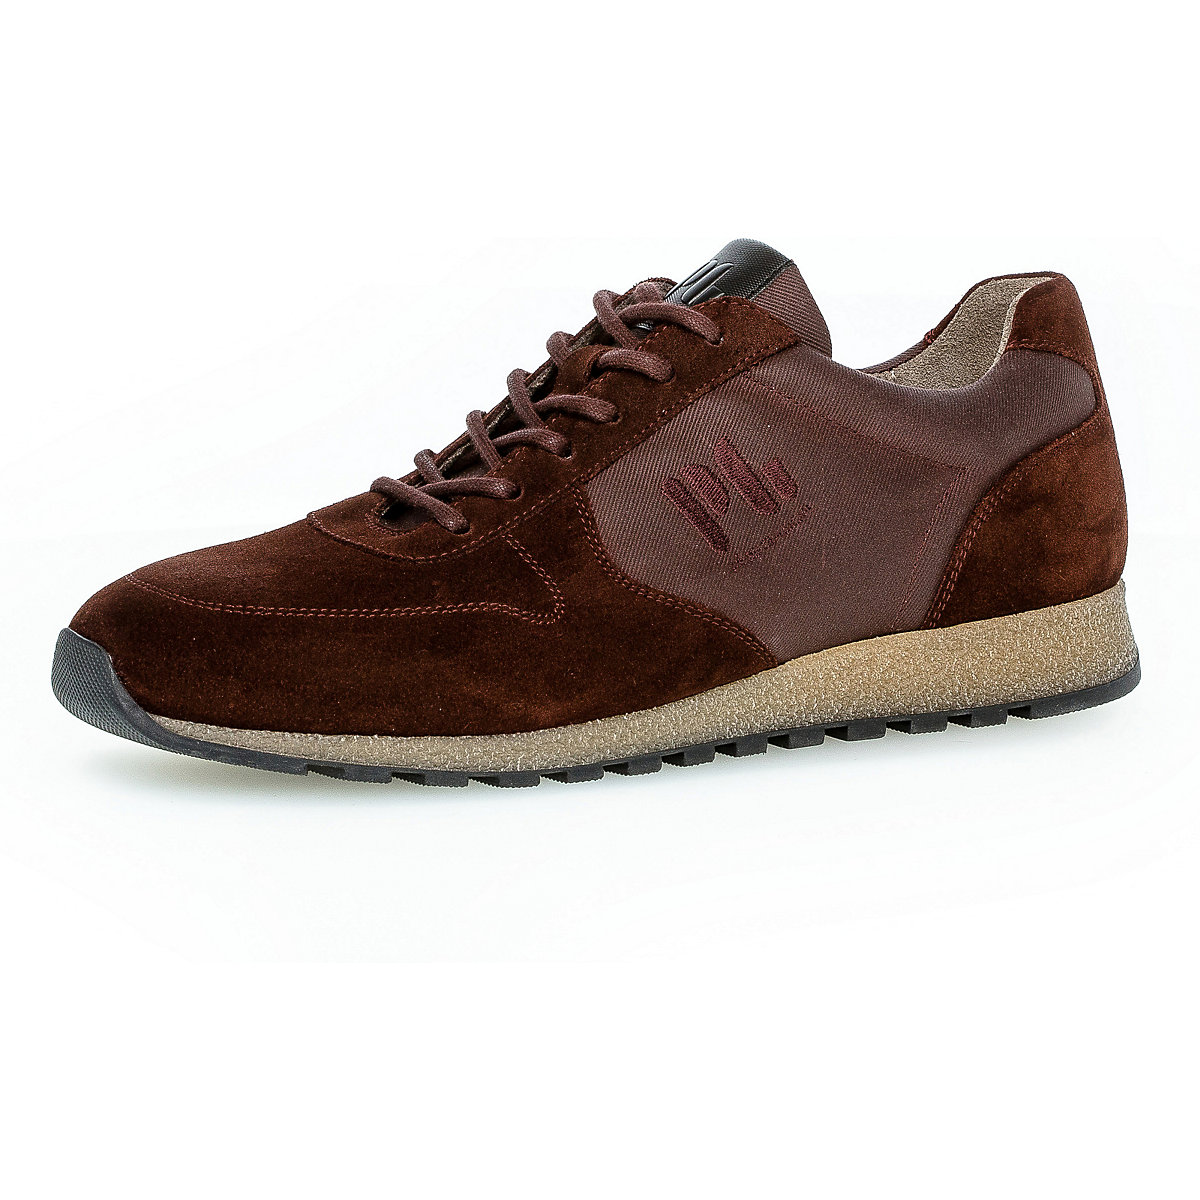 PIUS GABOR Pius Gabor Sneaker low Materialmix Leder/Textil rot Sneakers Low rot